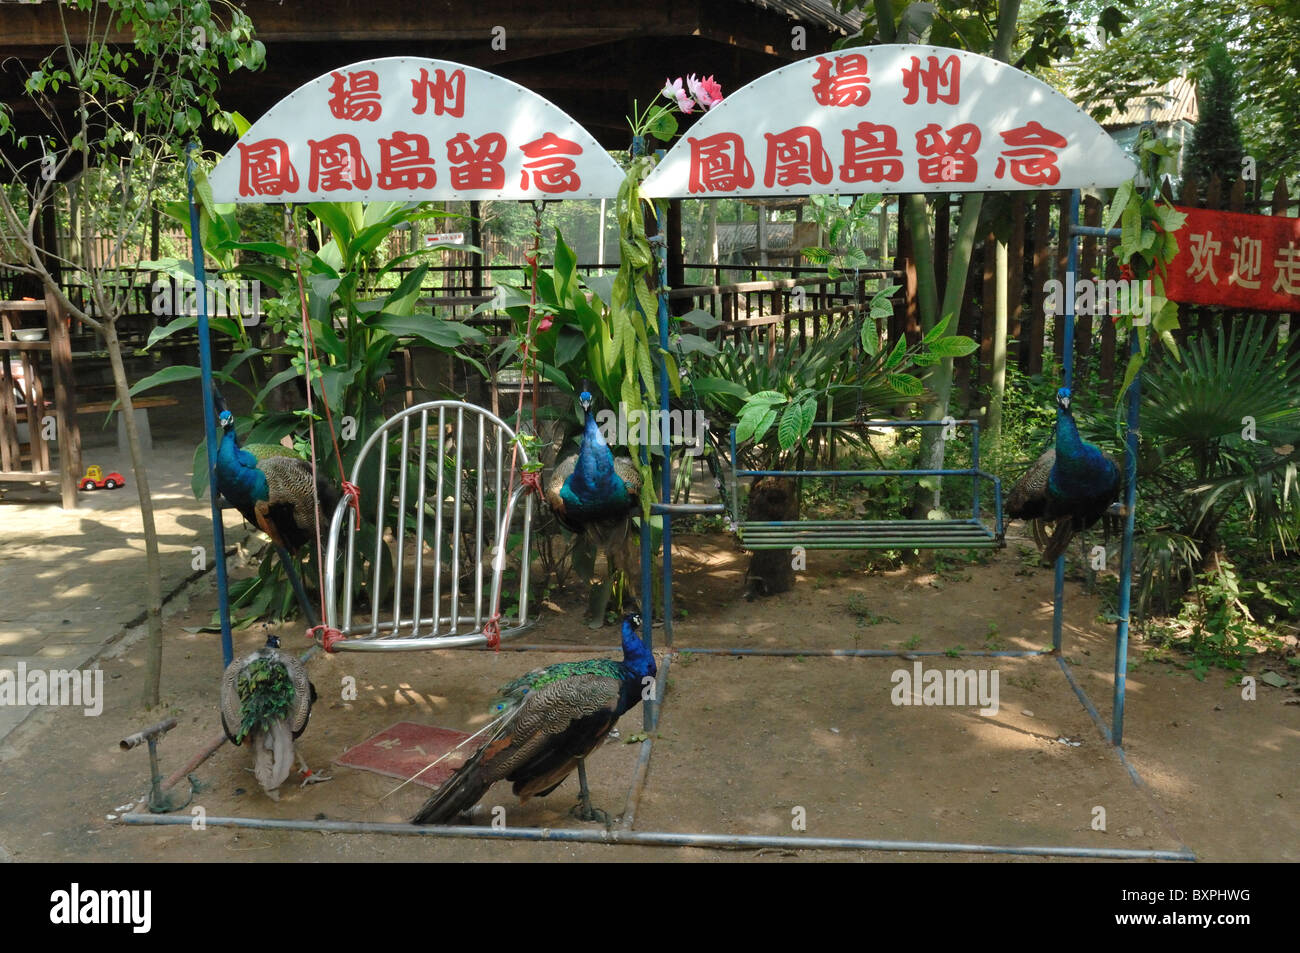 Fairground facilities at Phoenix Garden peoples park Yangzhou China Stock Photo